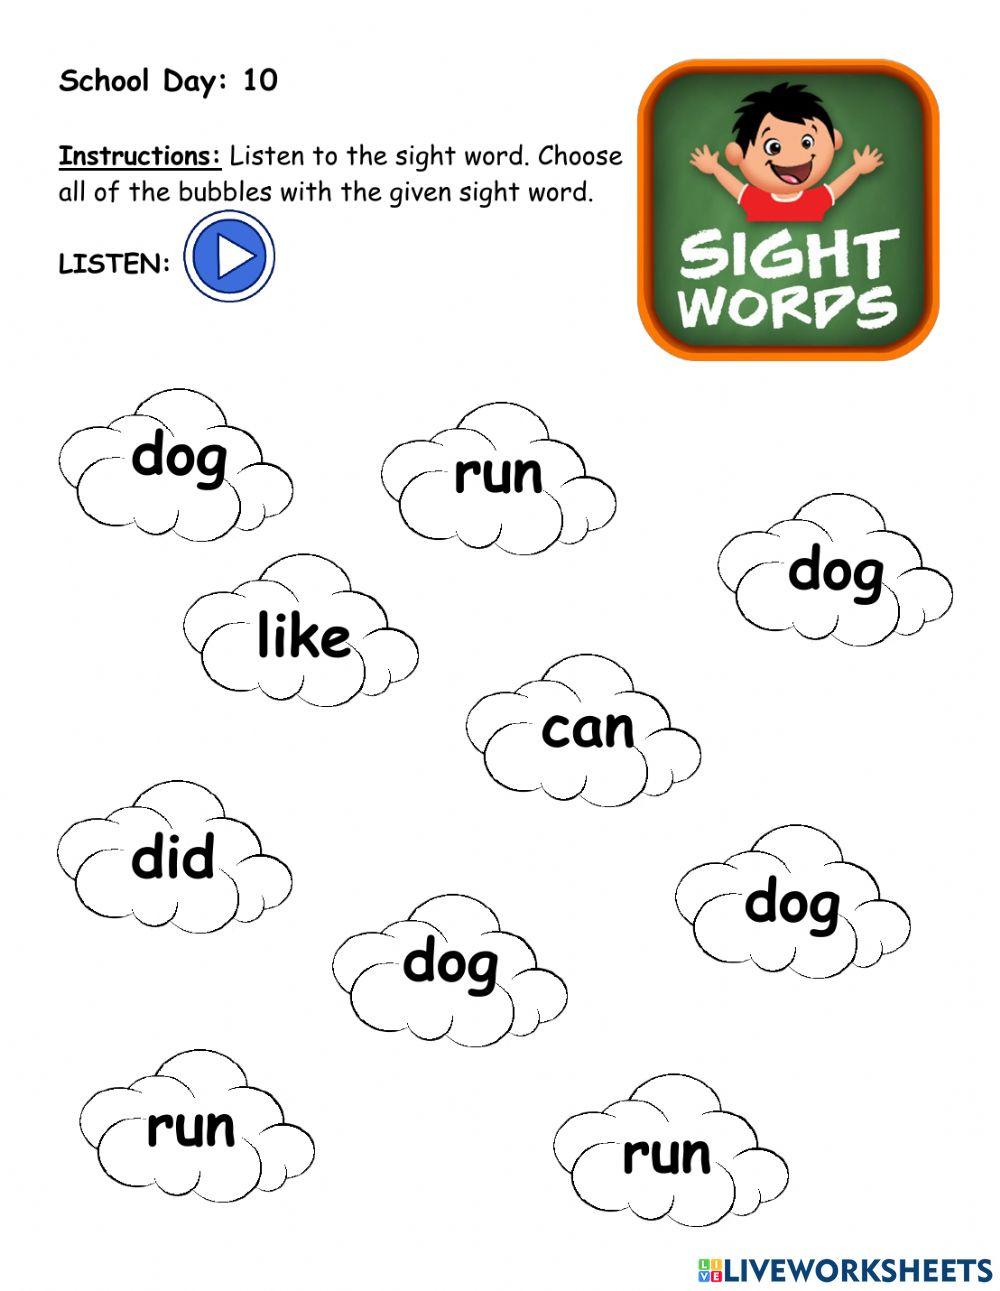 Sight word: dog